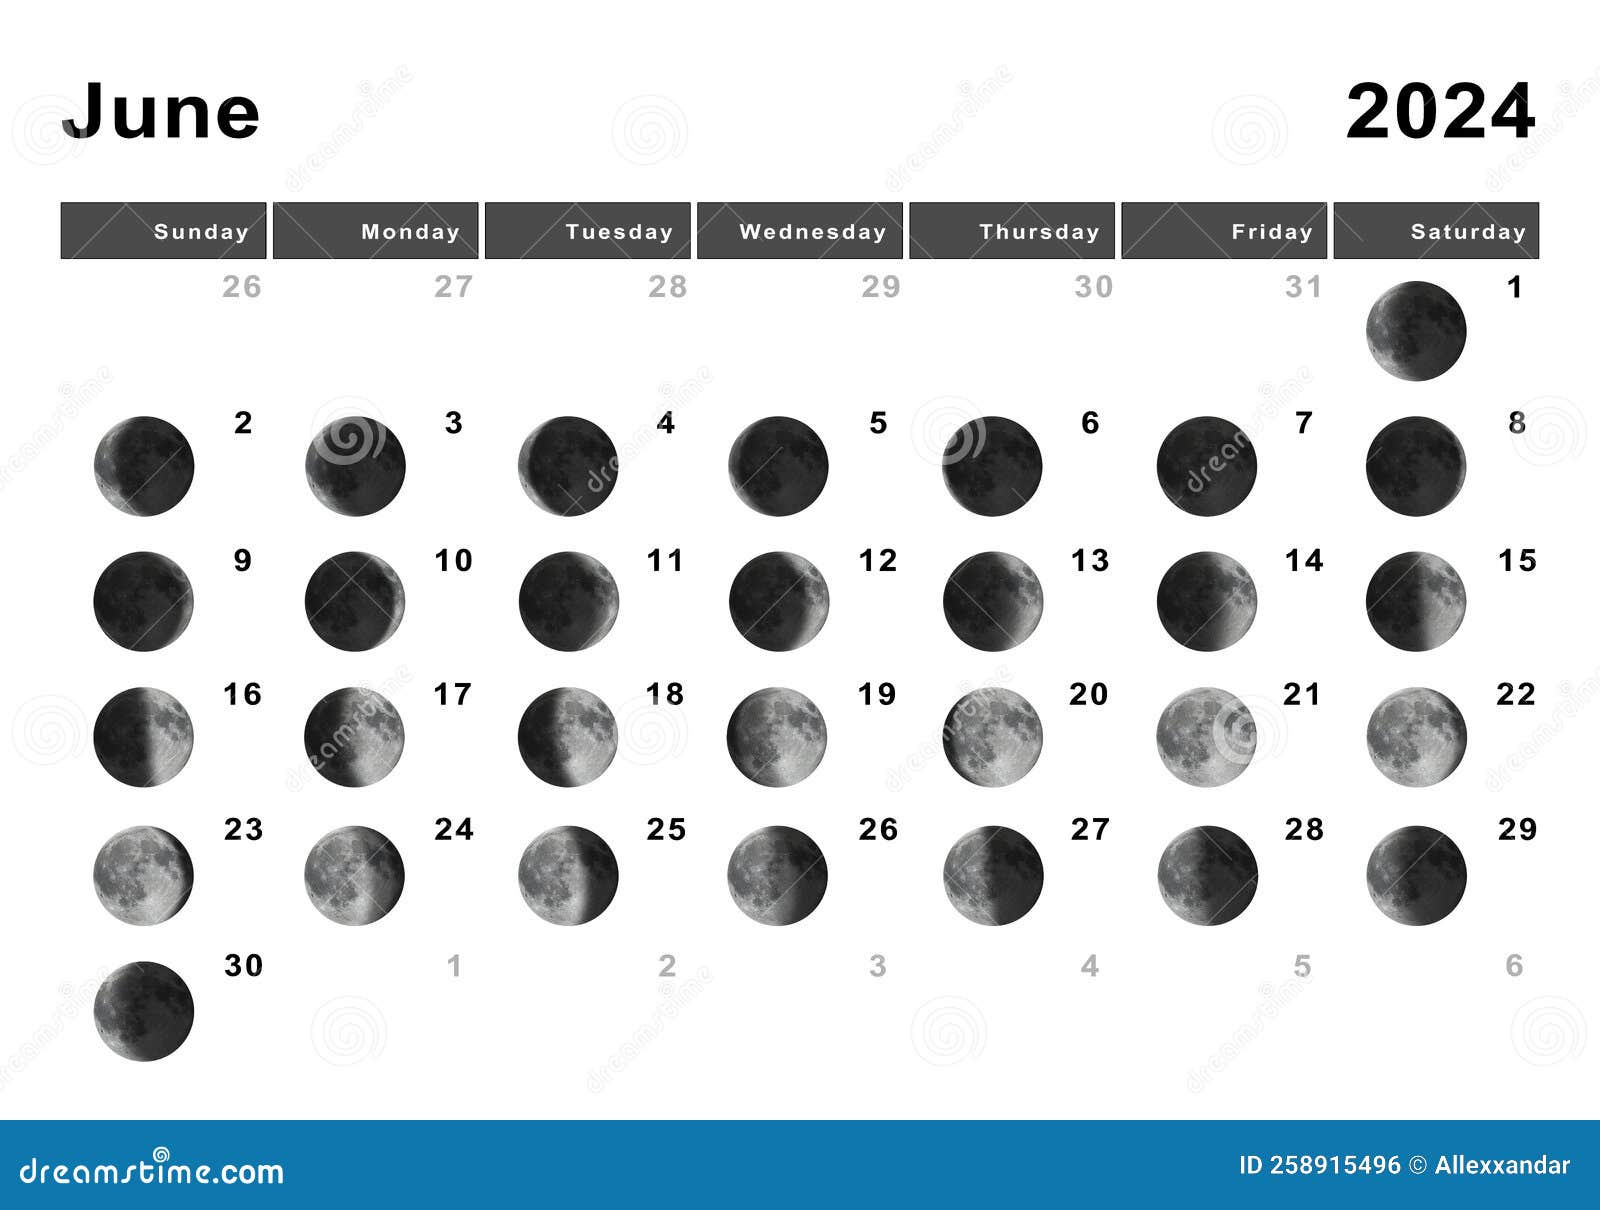 June 2024 Lunar Calendar, Moon Cycles Stock Illustration inside June 2024 Moon Calendar